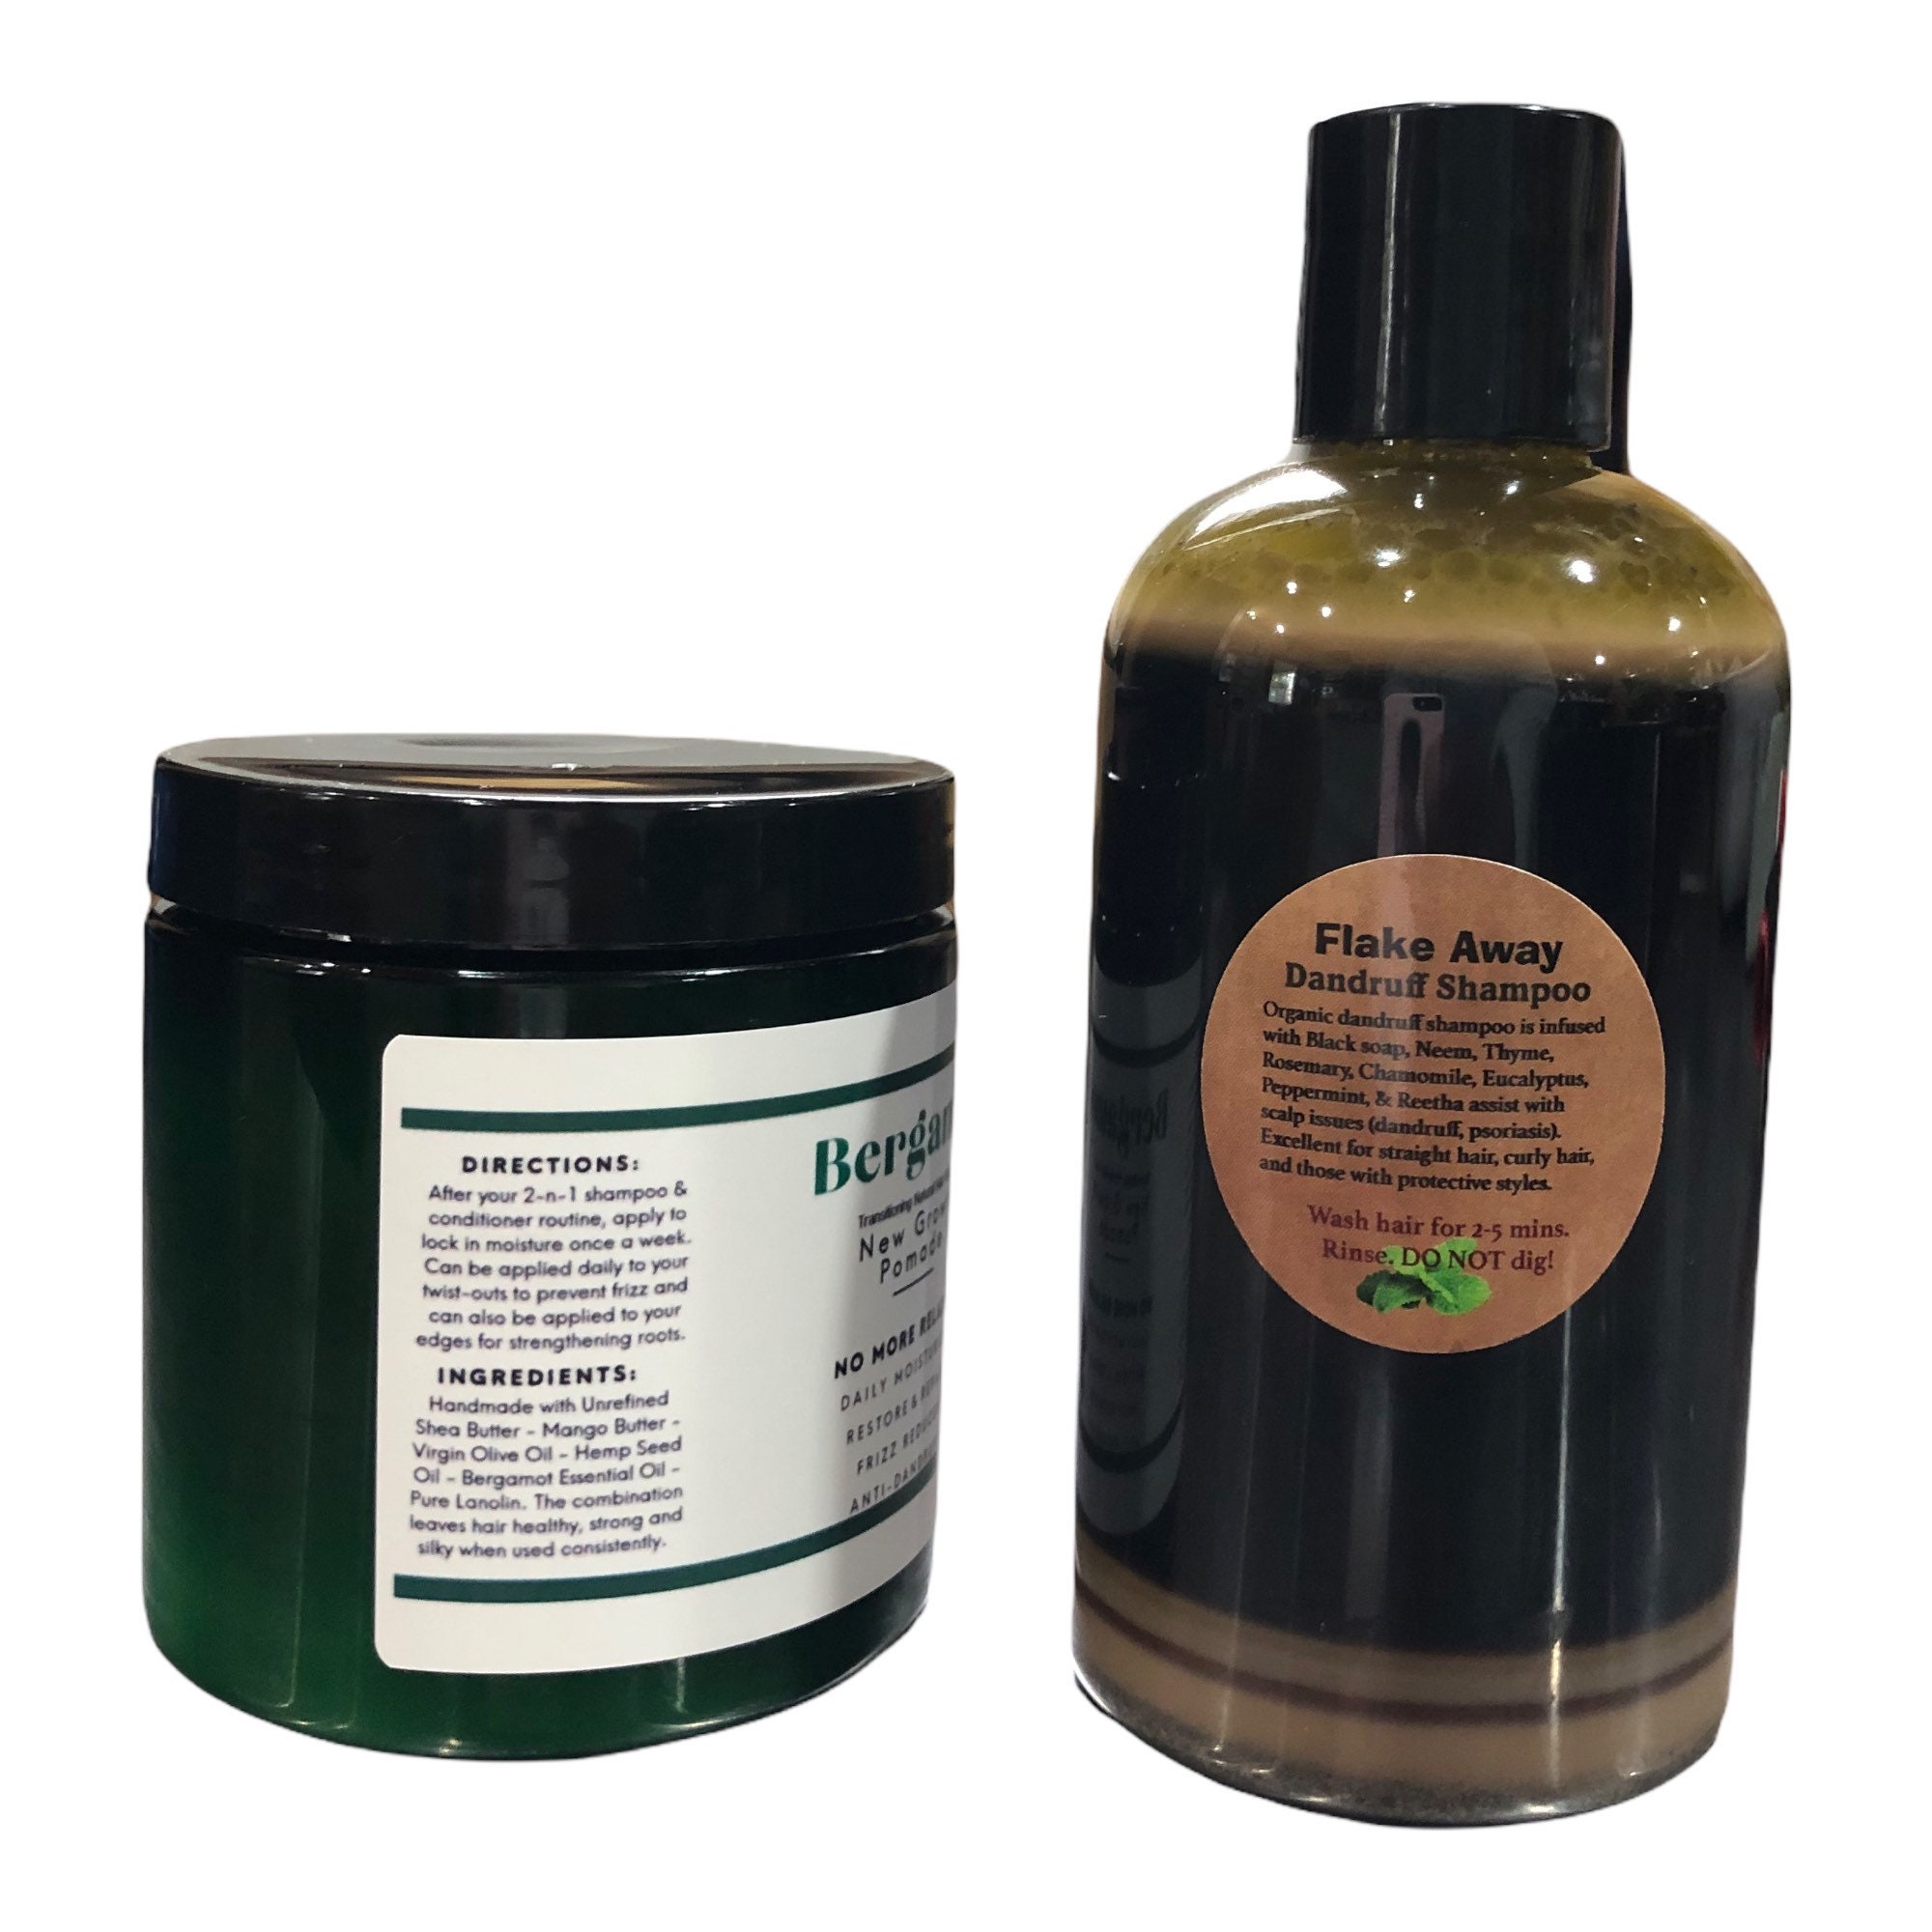 Flake Away Organic Dandruff Shampoo & Bergamot Hair Growth - Etsy